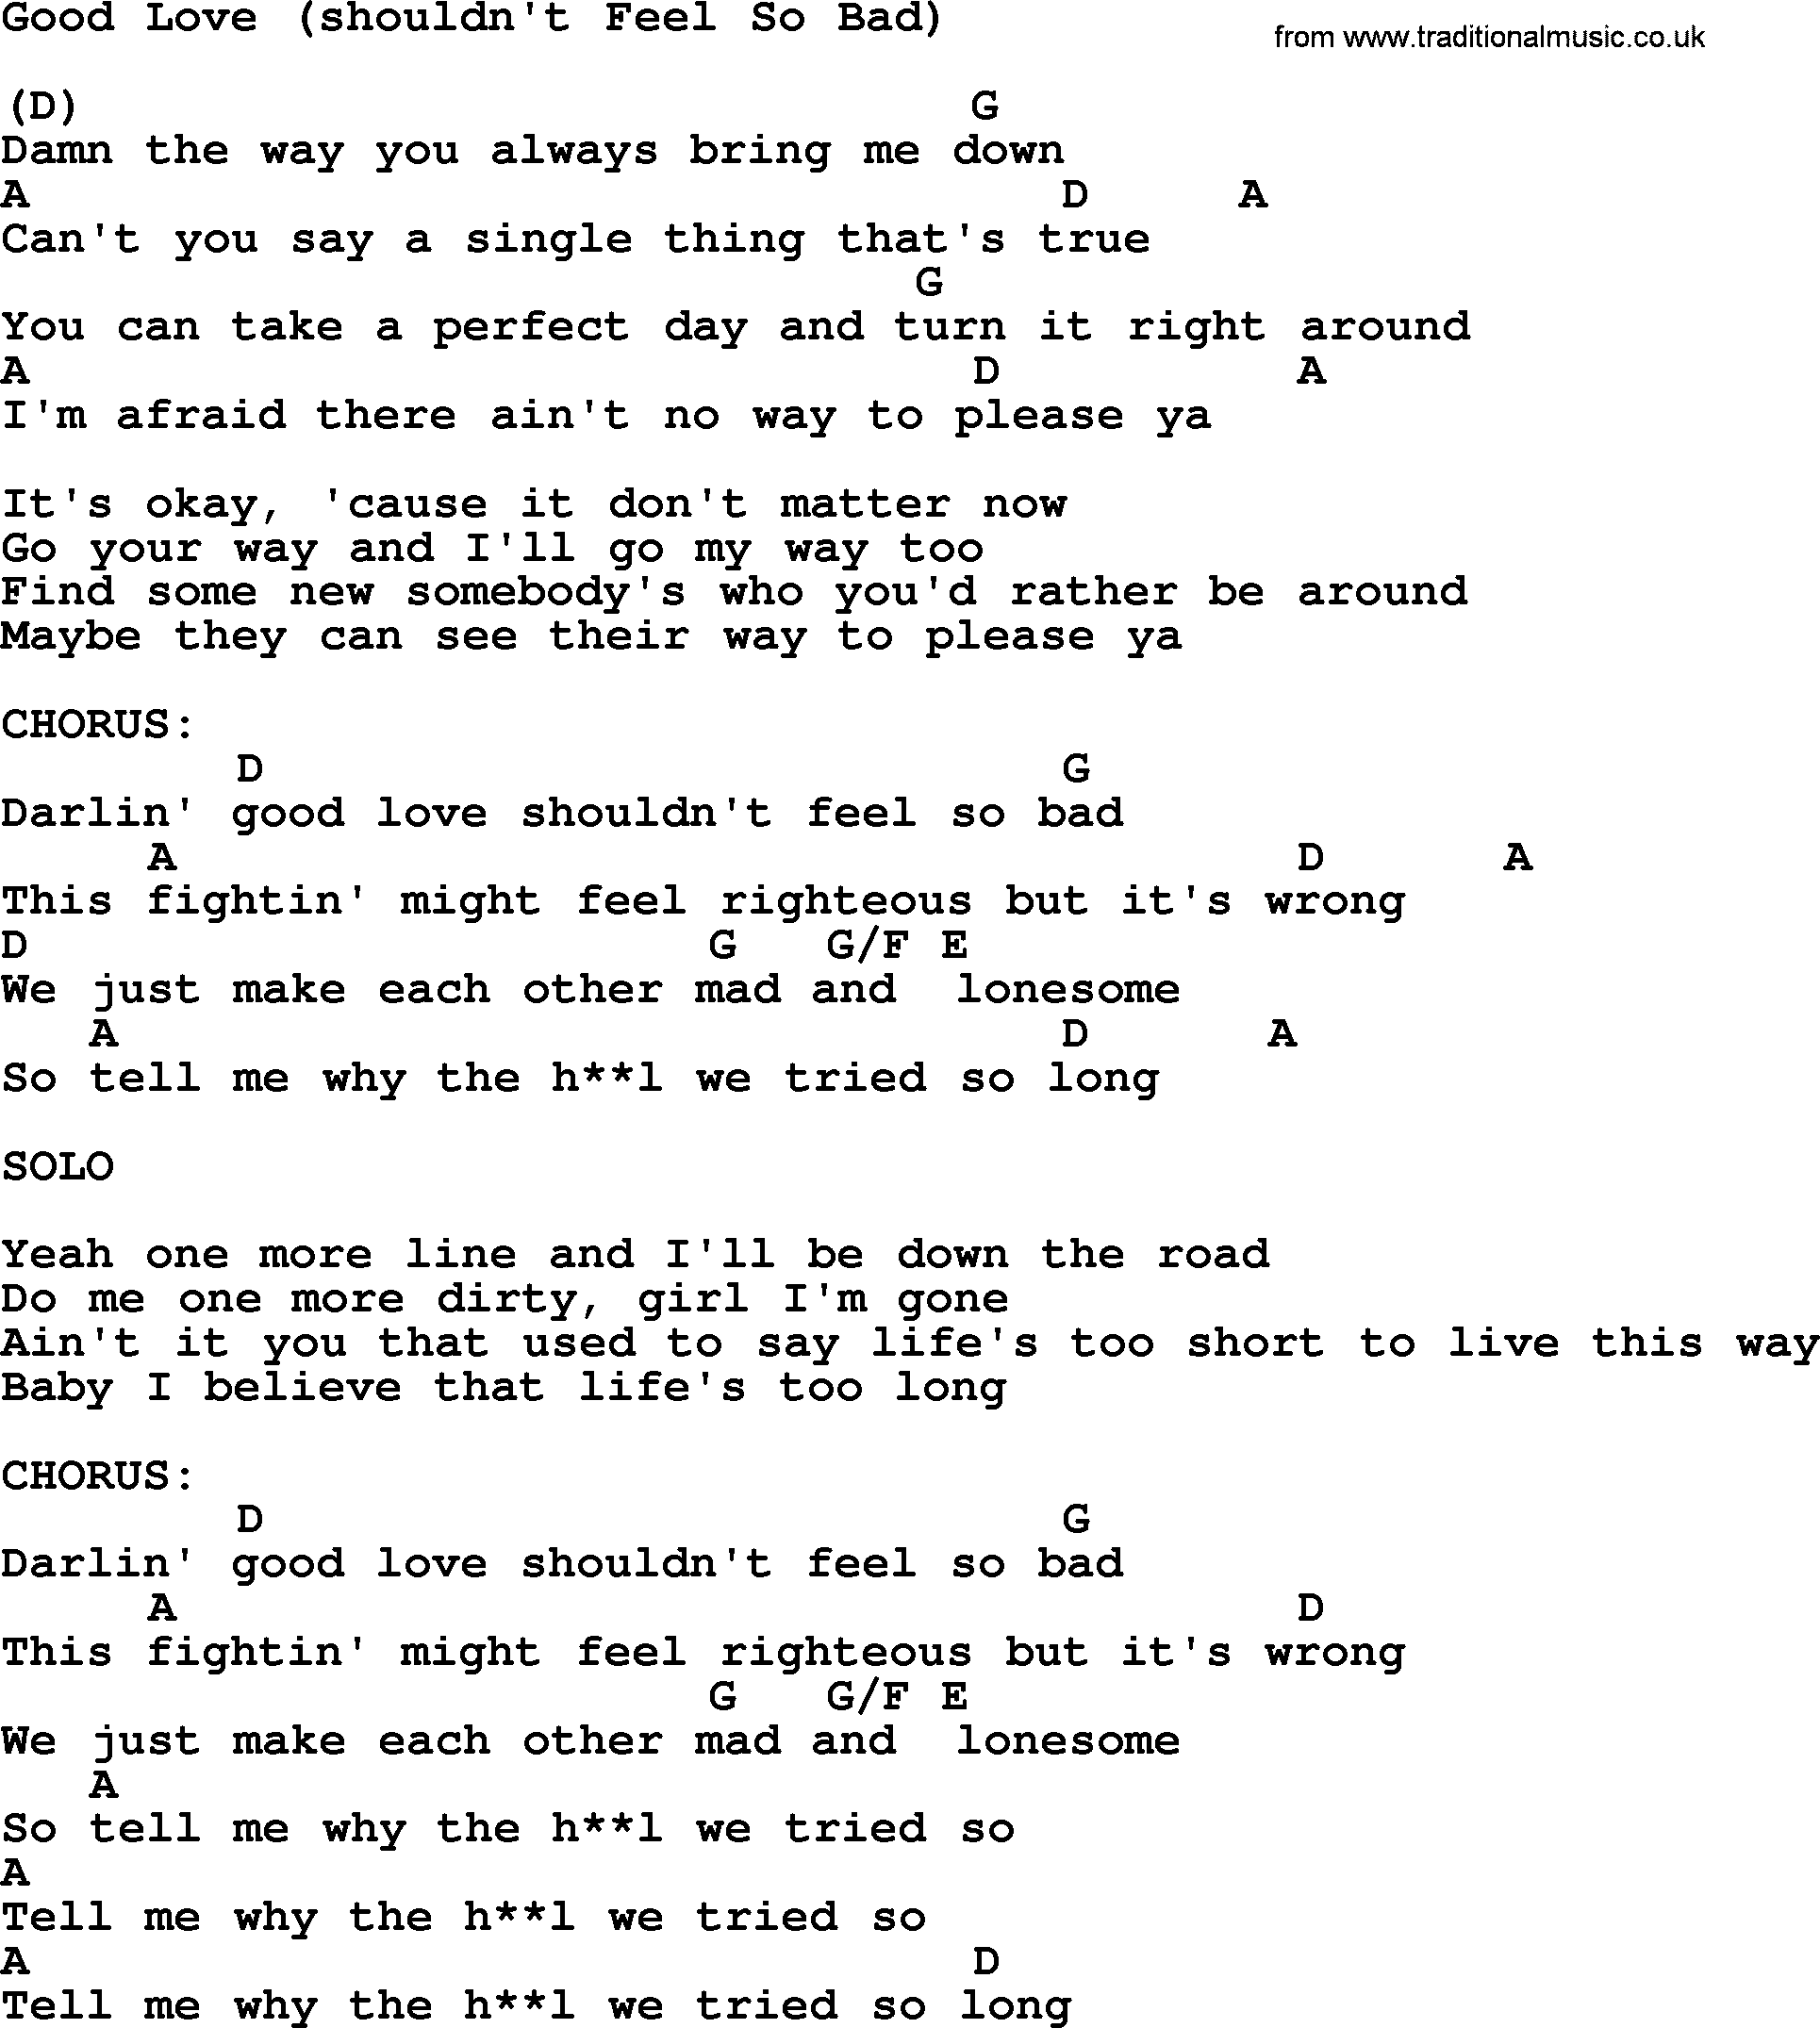 Kris Kristofferson song: Good Love (shouldn't Feel So Bad) lyrics and chords